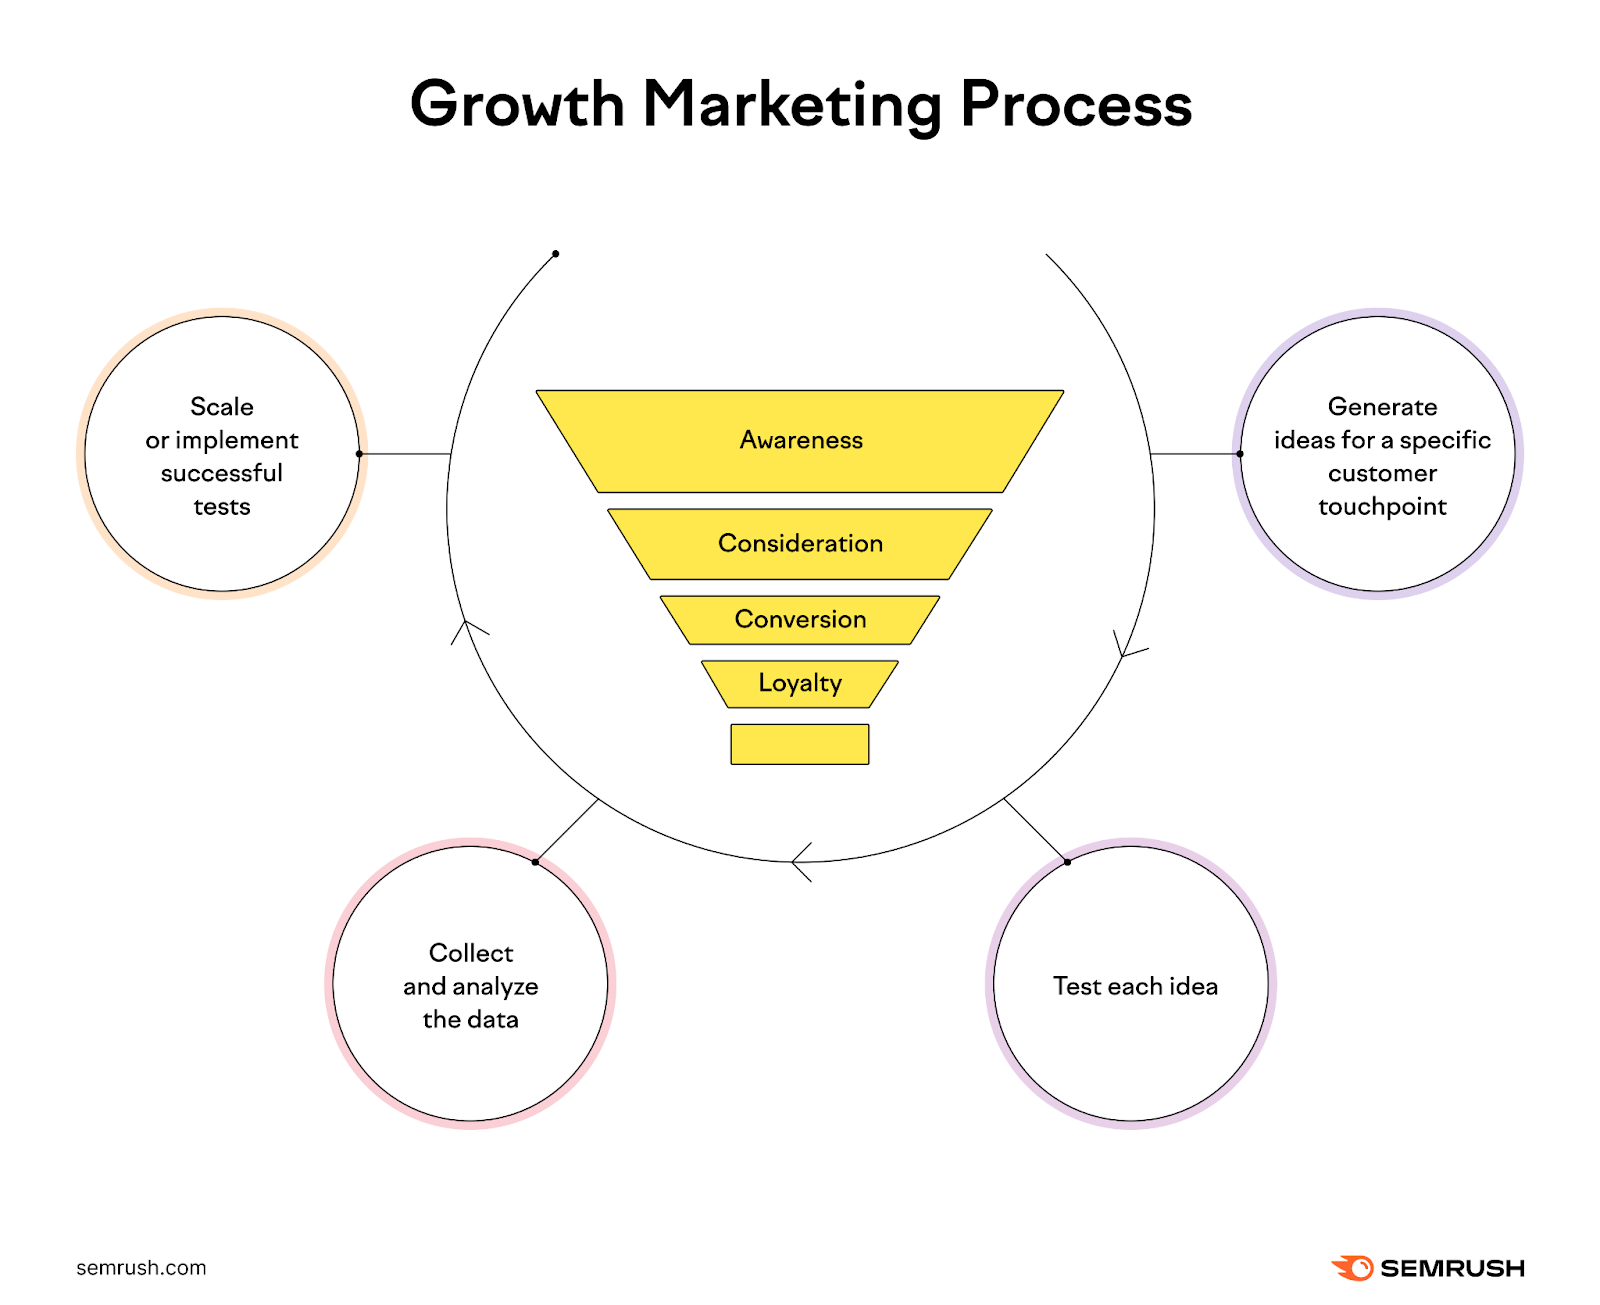 An illustration summarizing growth marketing process